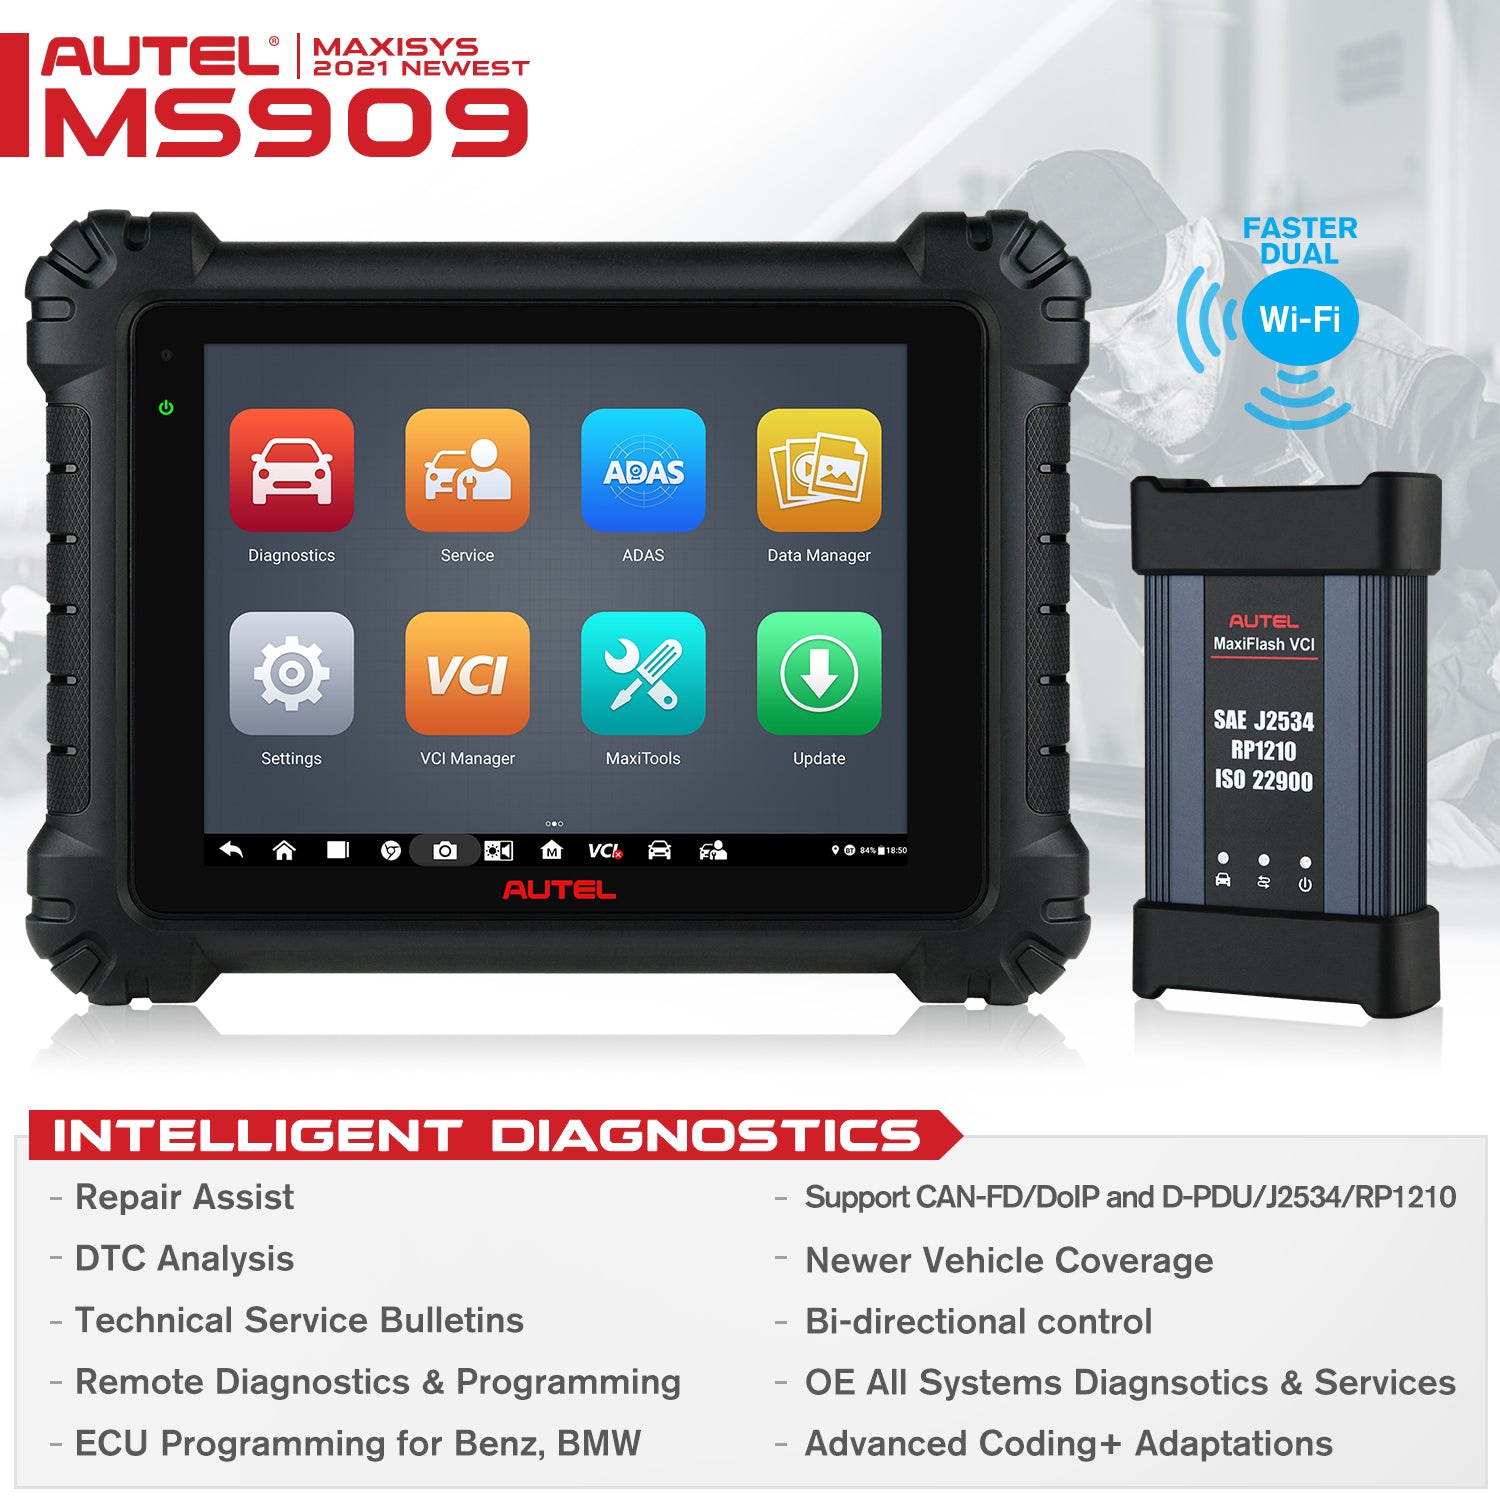 ms909 diagnostics Features